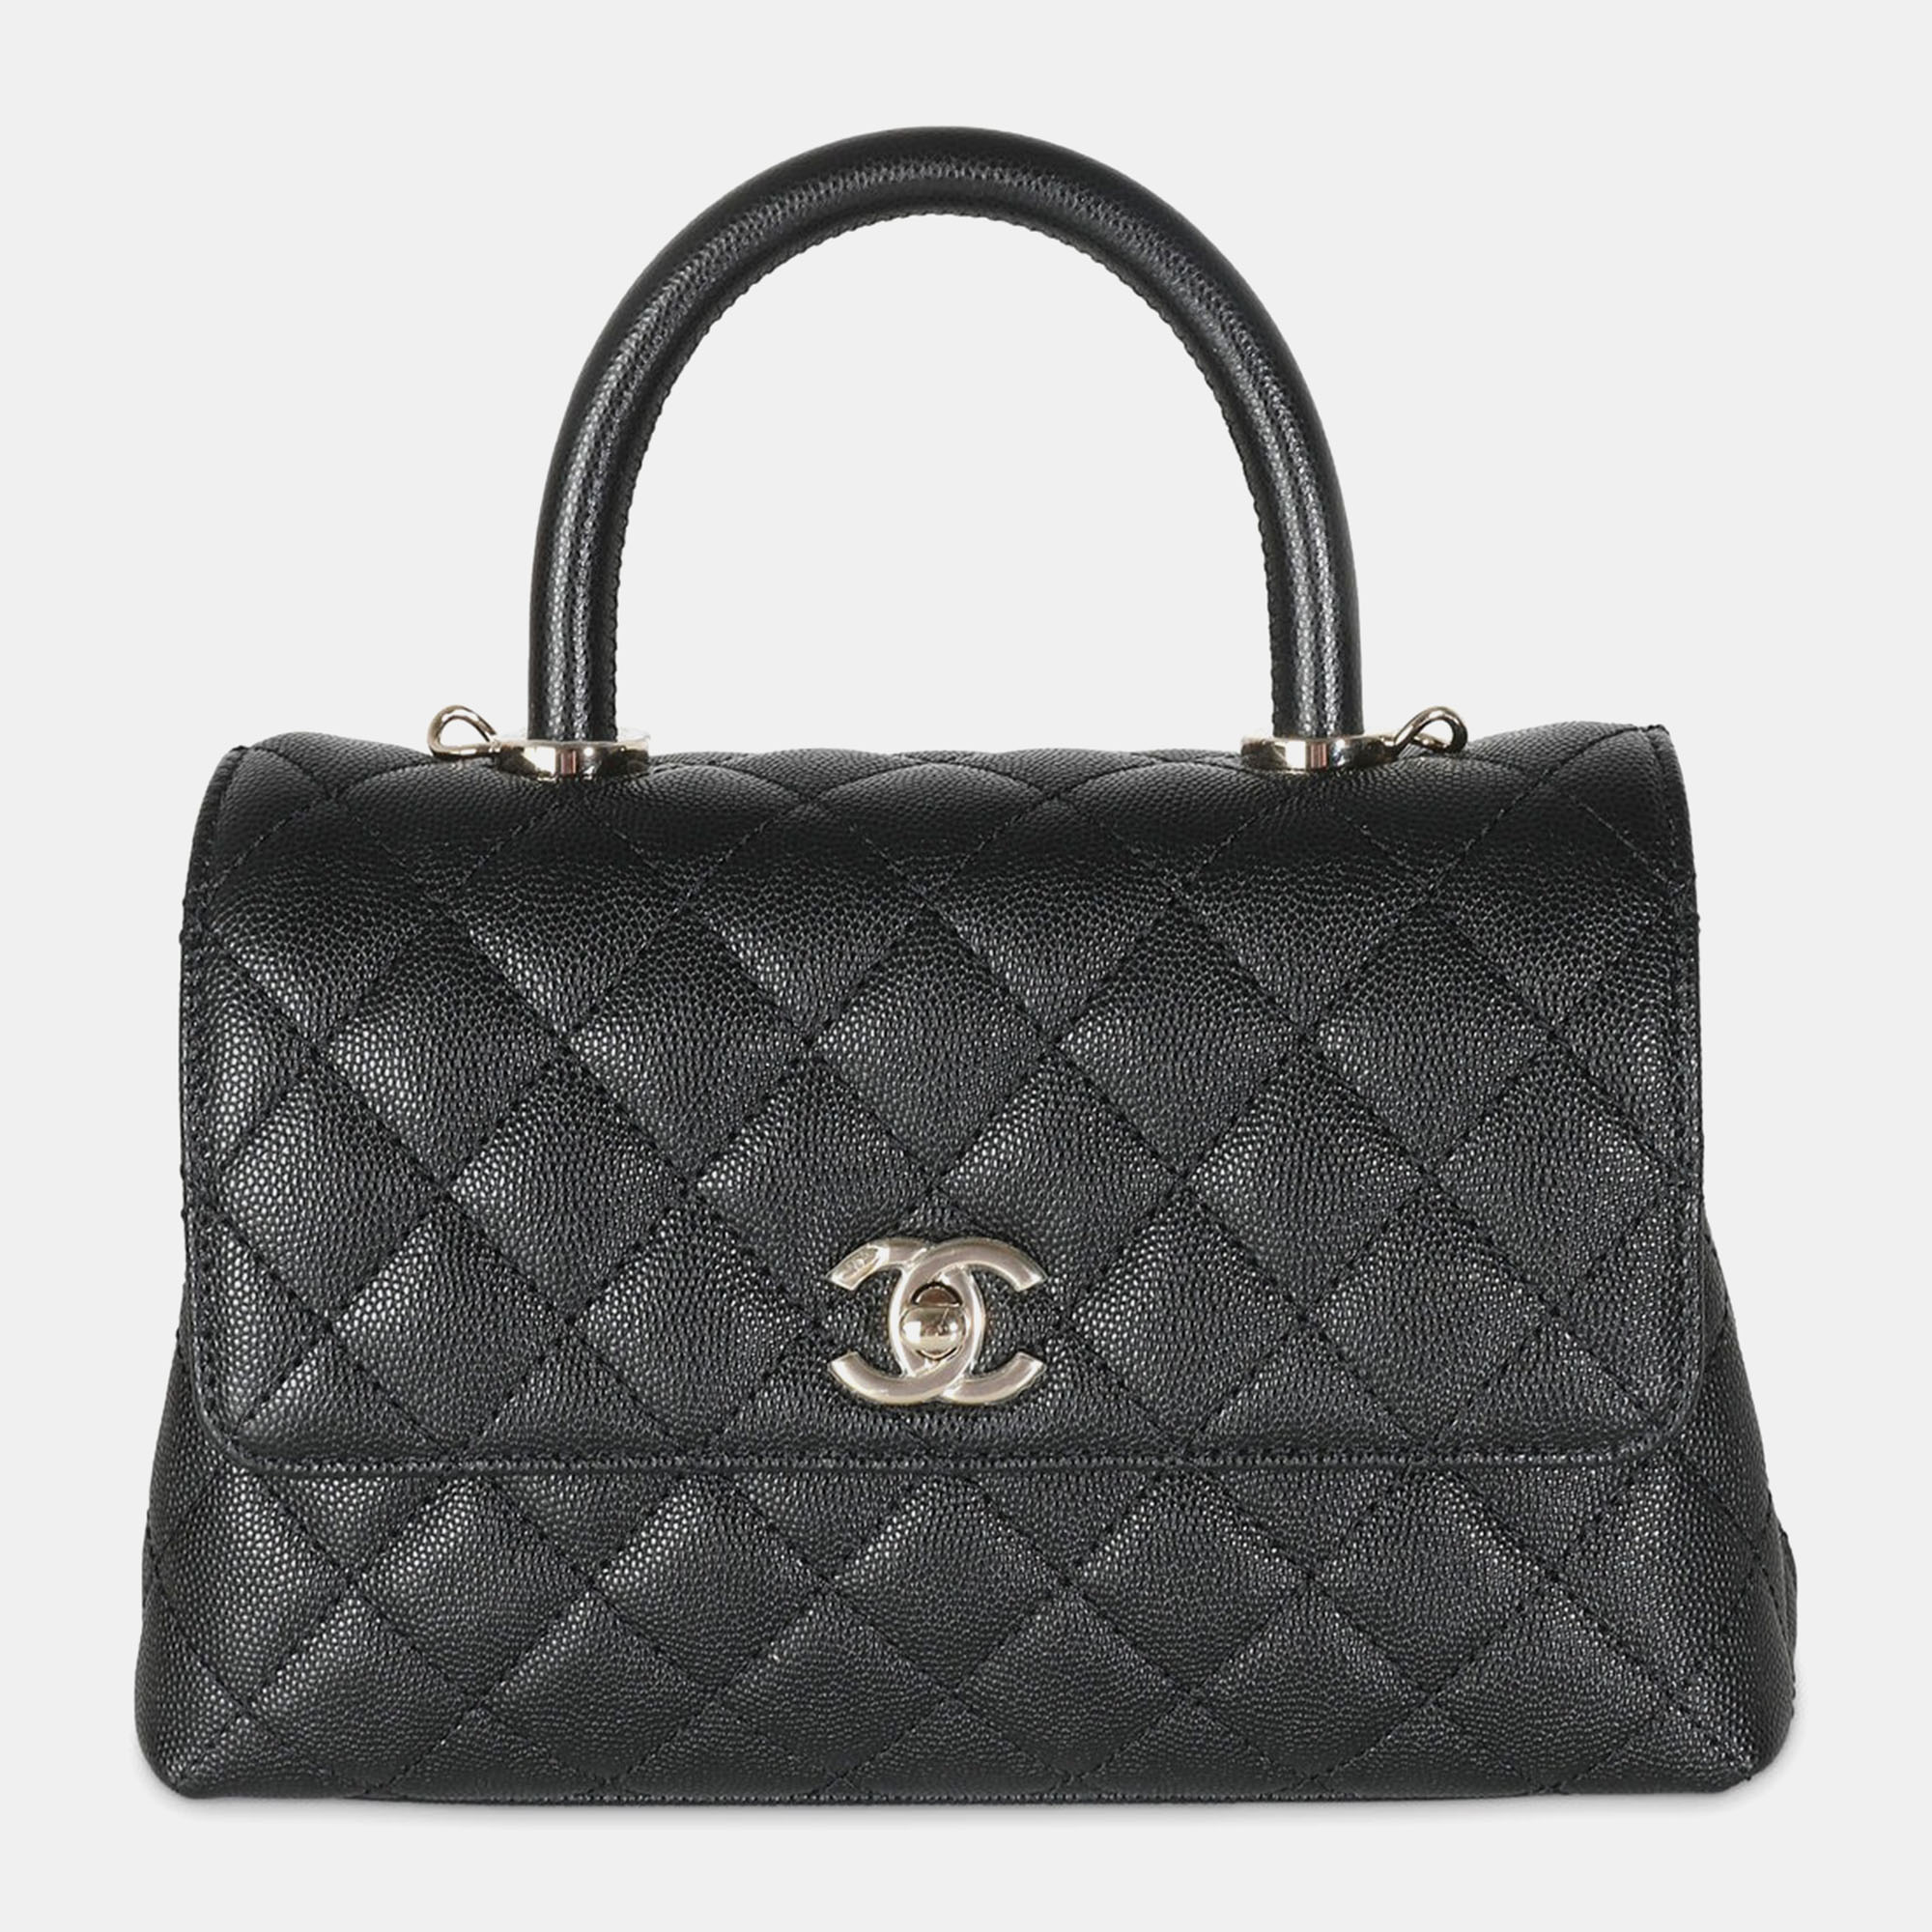 

Chanel Black Caviar Leather Small Coco Top Handle Bag